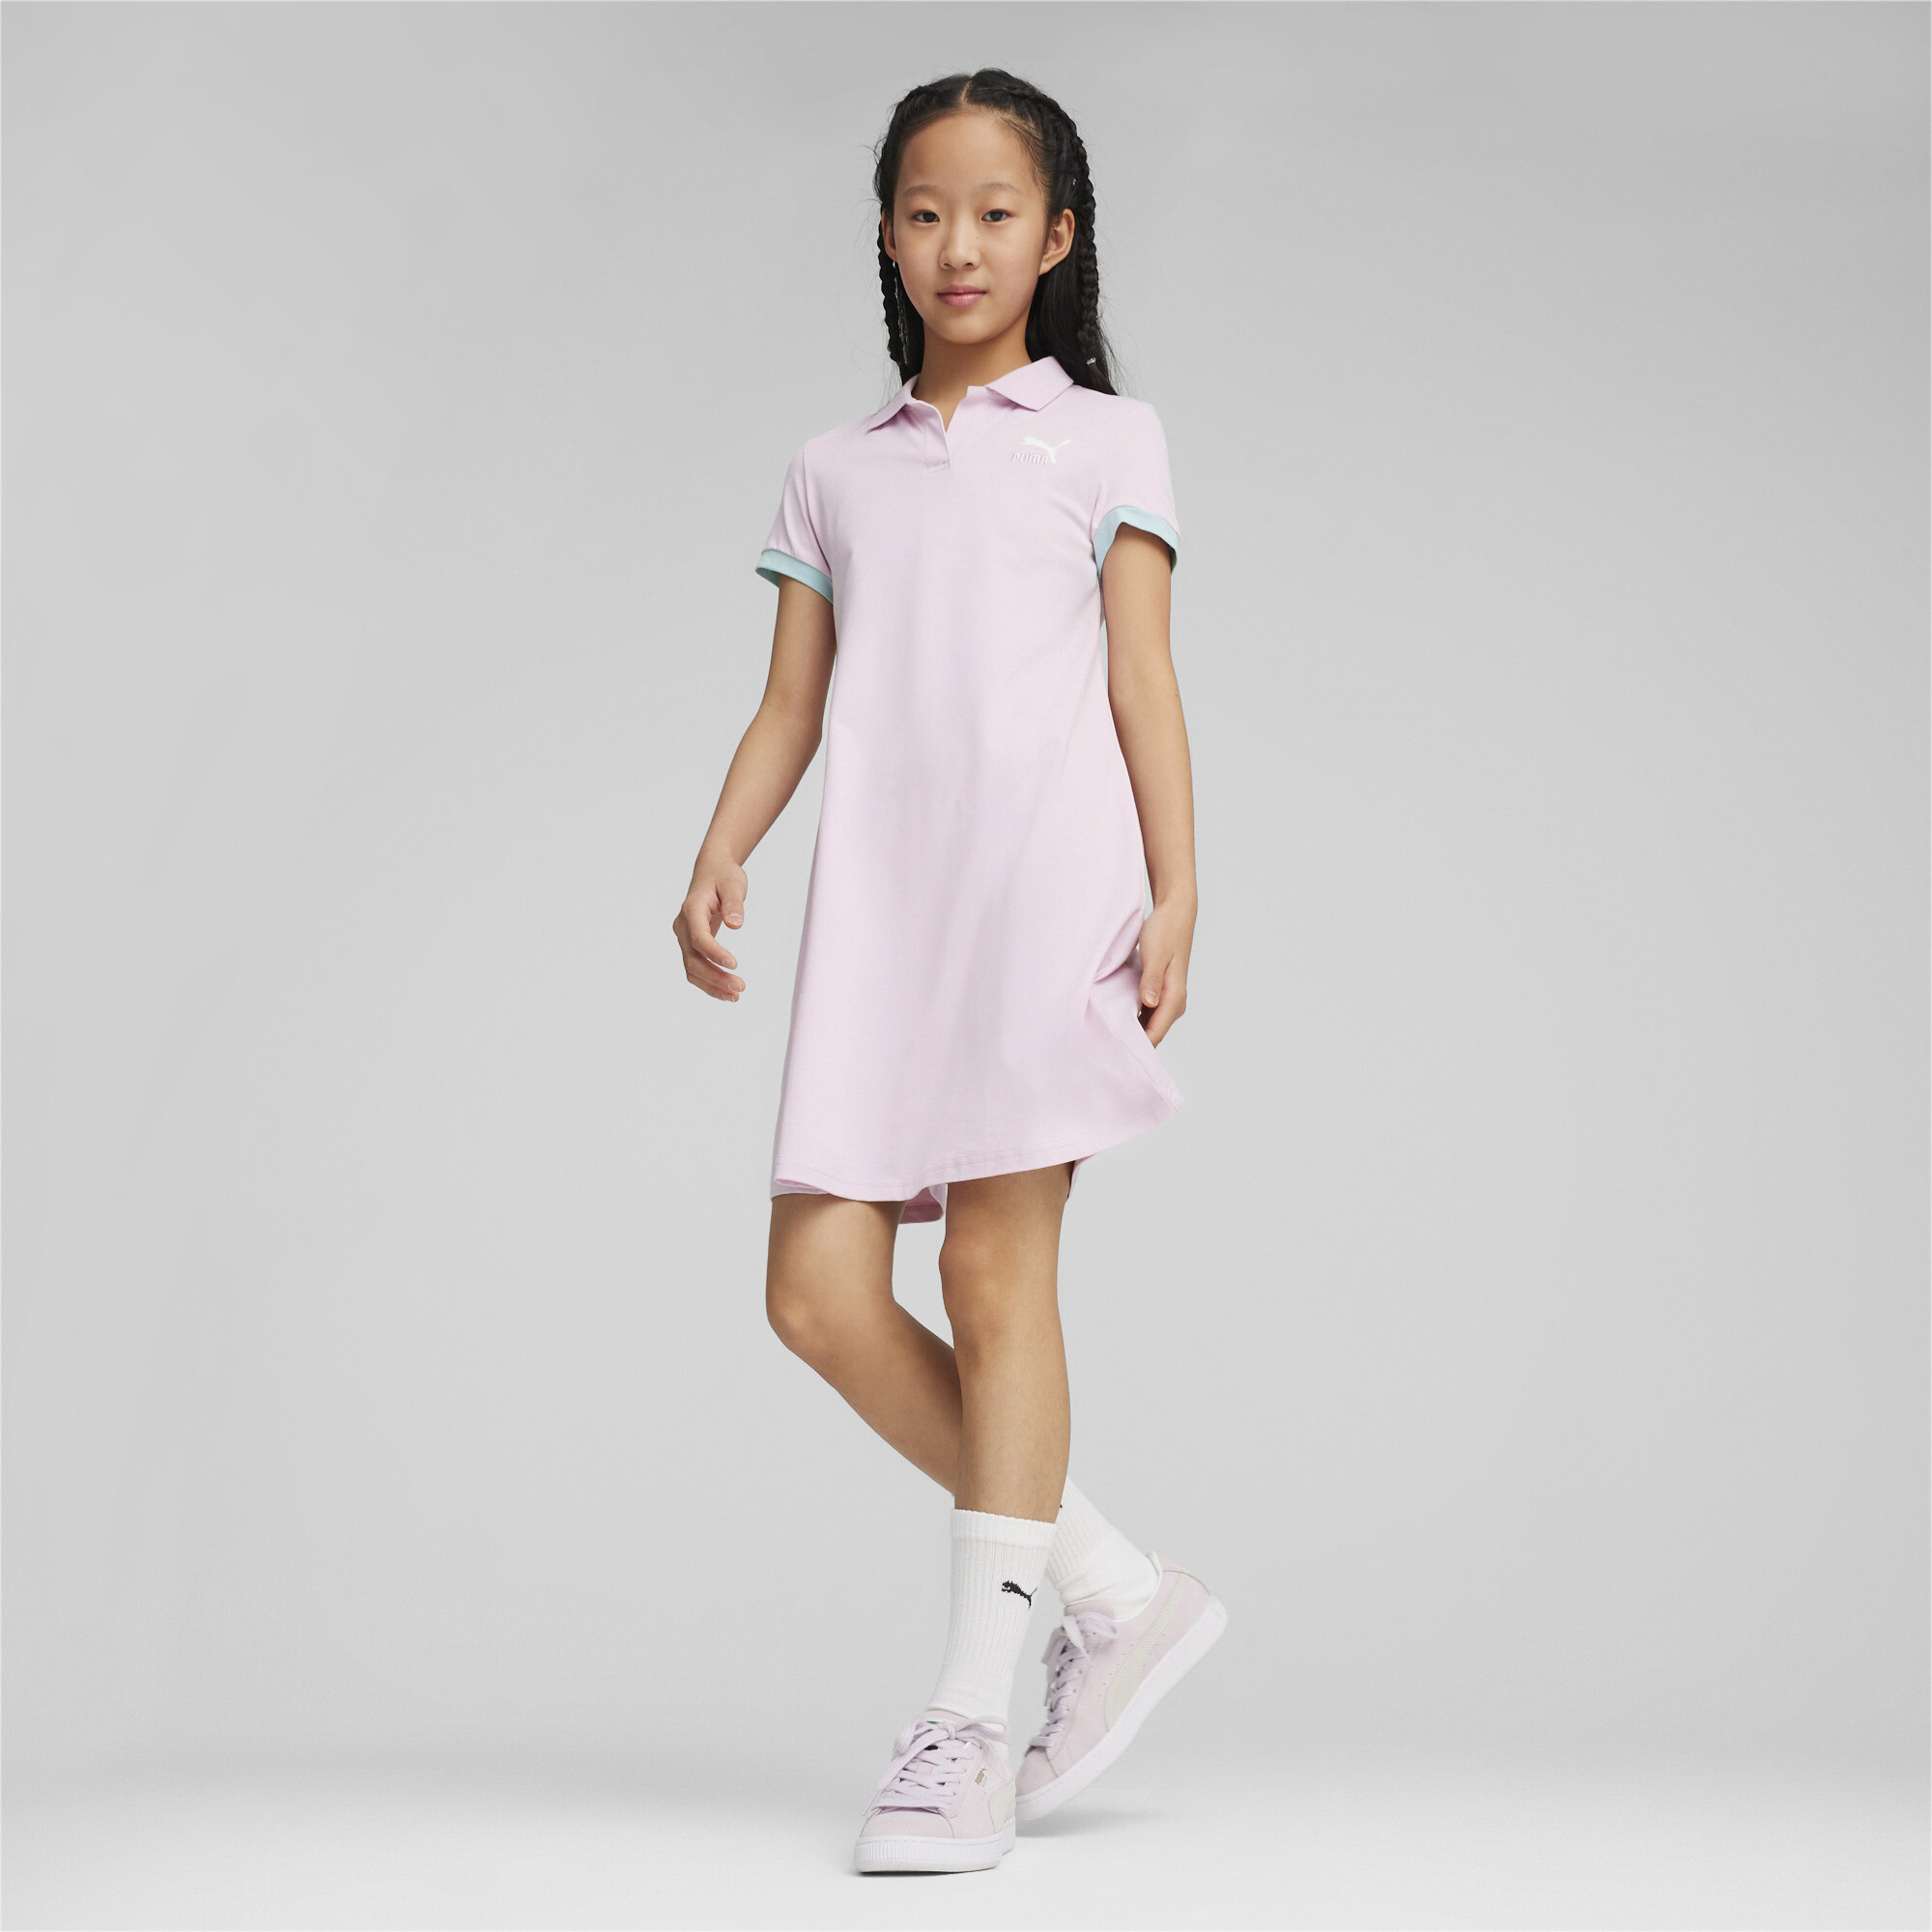 PUMA CLASSICS Match Point Dress In Purple, Size 7-8 Youth